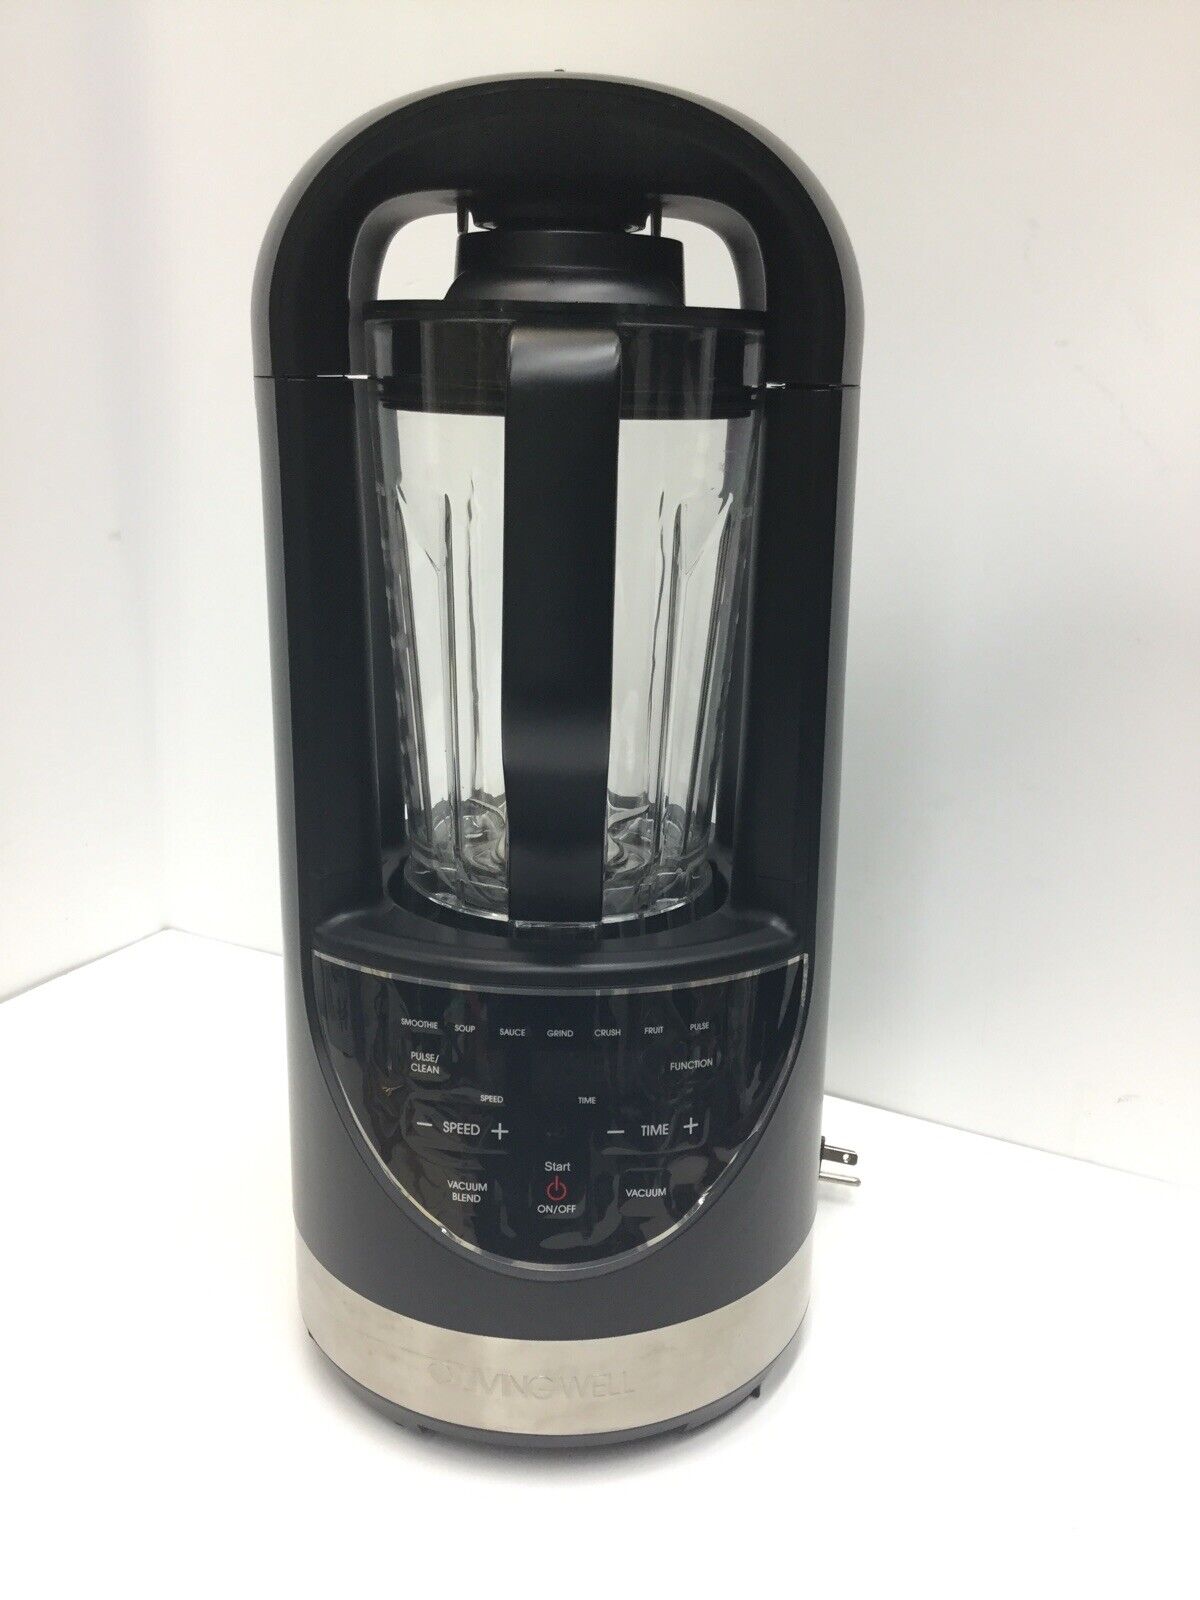 Living Well Vacuum Blender VK-6009, Black Deficyt super specjalna cena, prawdziwa gwarancja!